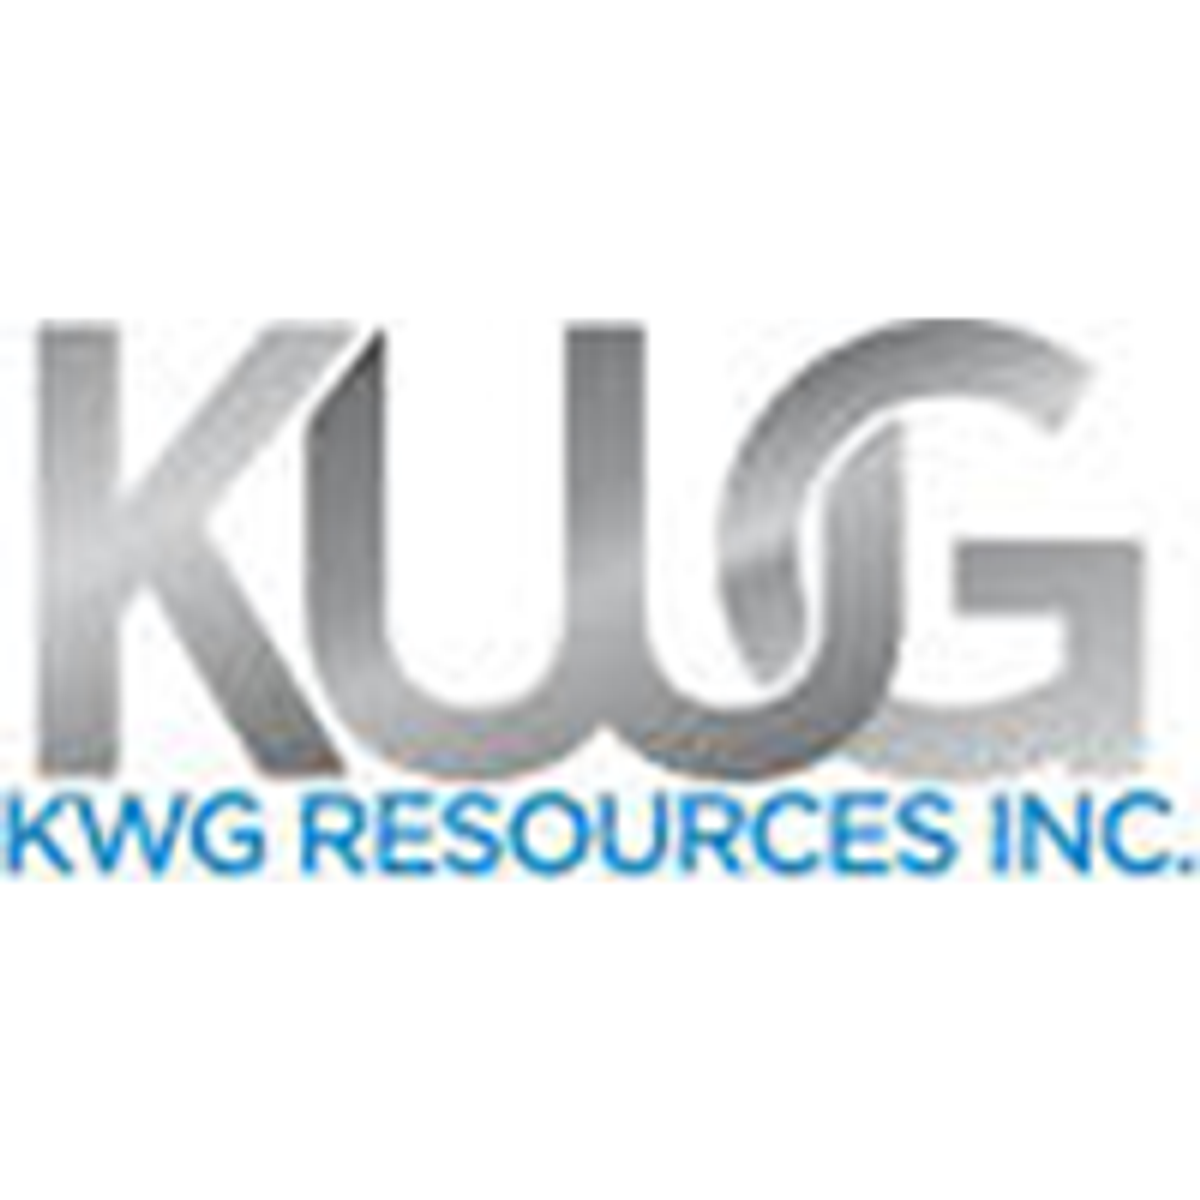 Fancamp Exploration Ltd. Acquires Securities of KWG Resources Inc.